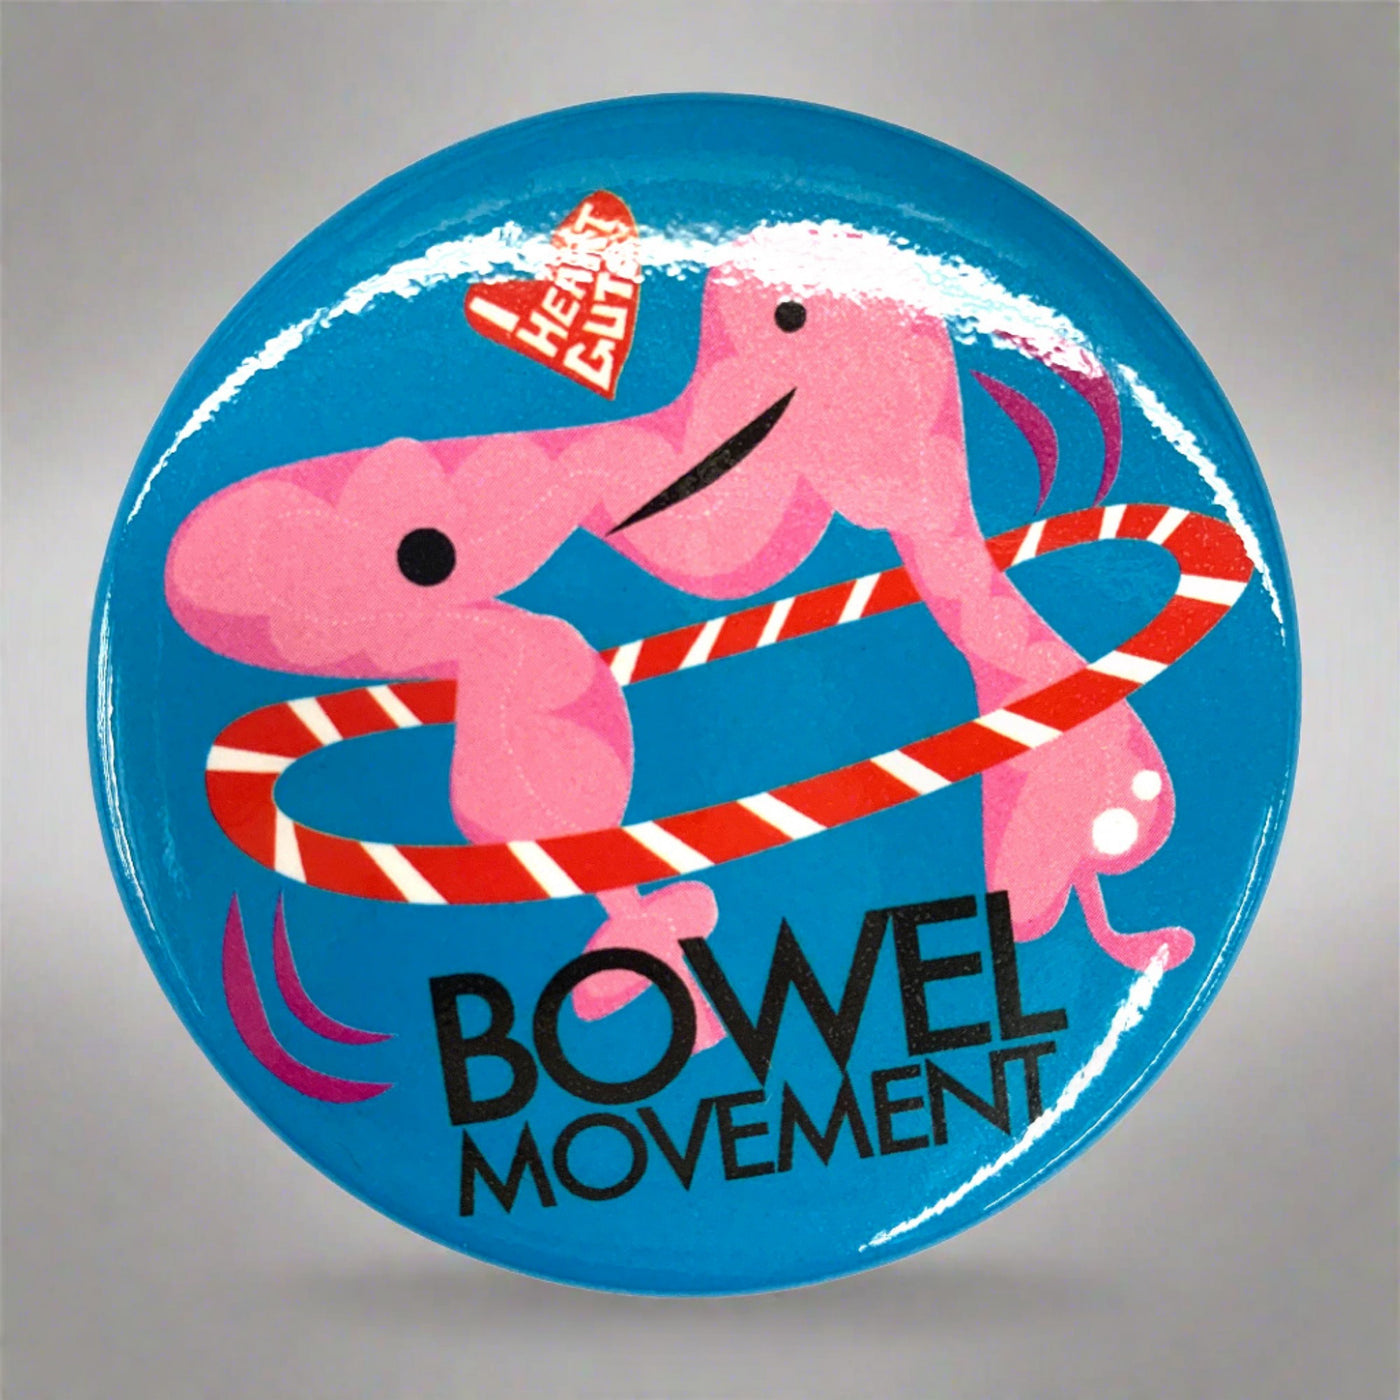 Bowel Movement - Colon Magnet - I Heart Guts